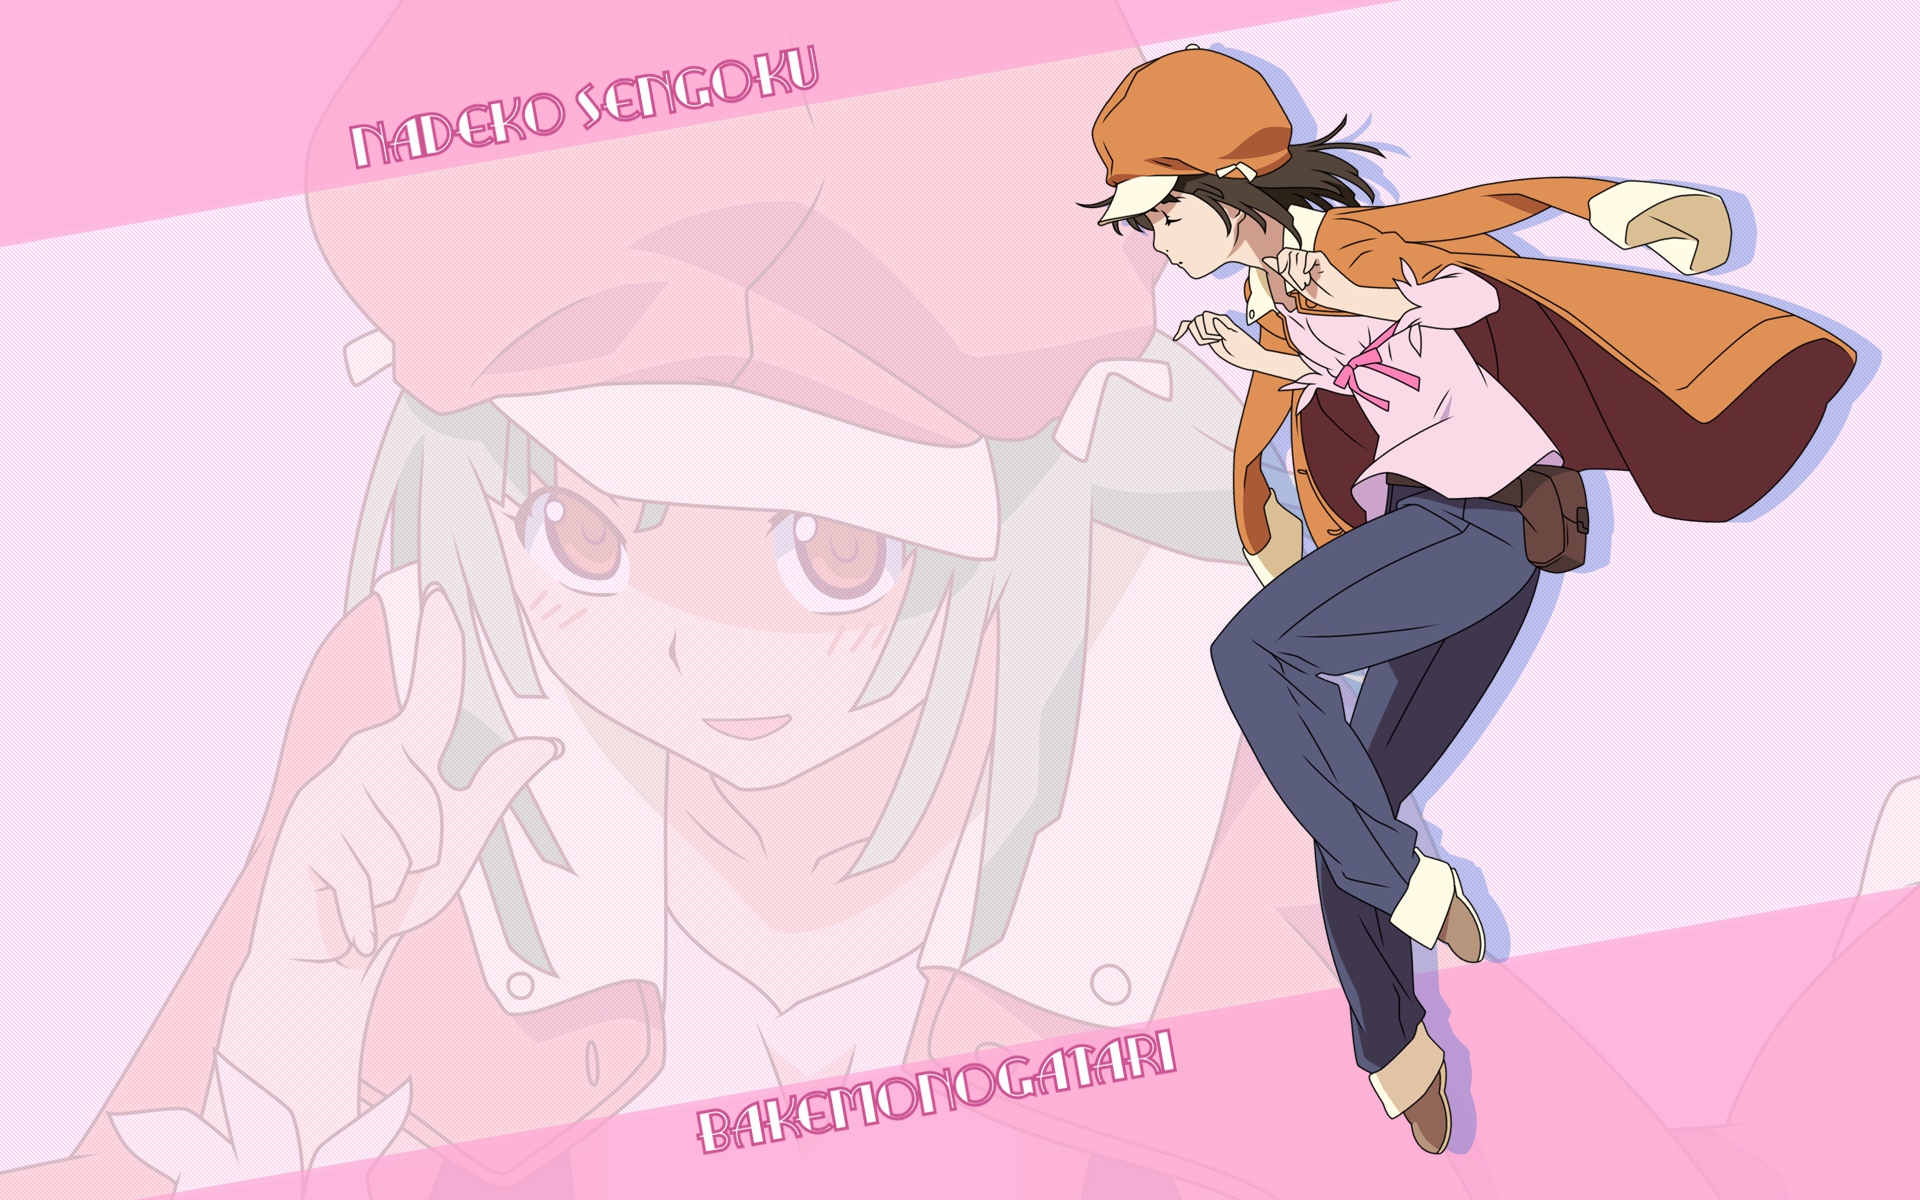 Nadeko Sengoku from the Monogatari series, a serene anime character in a captivating setting.